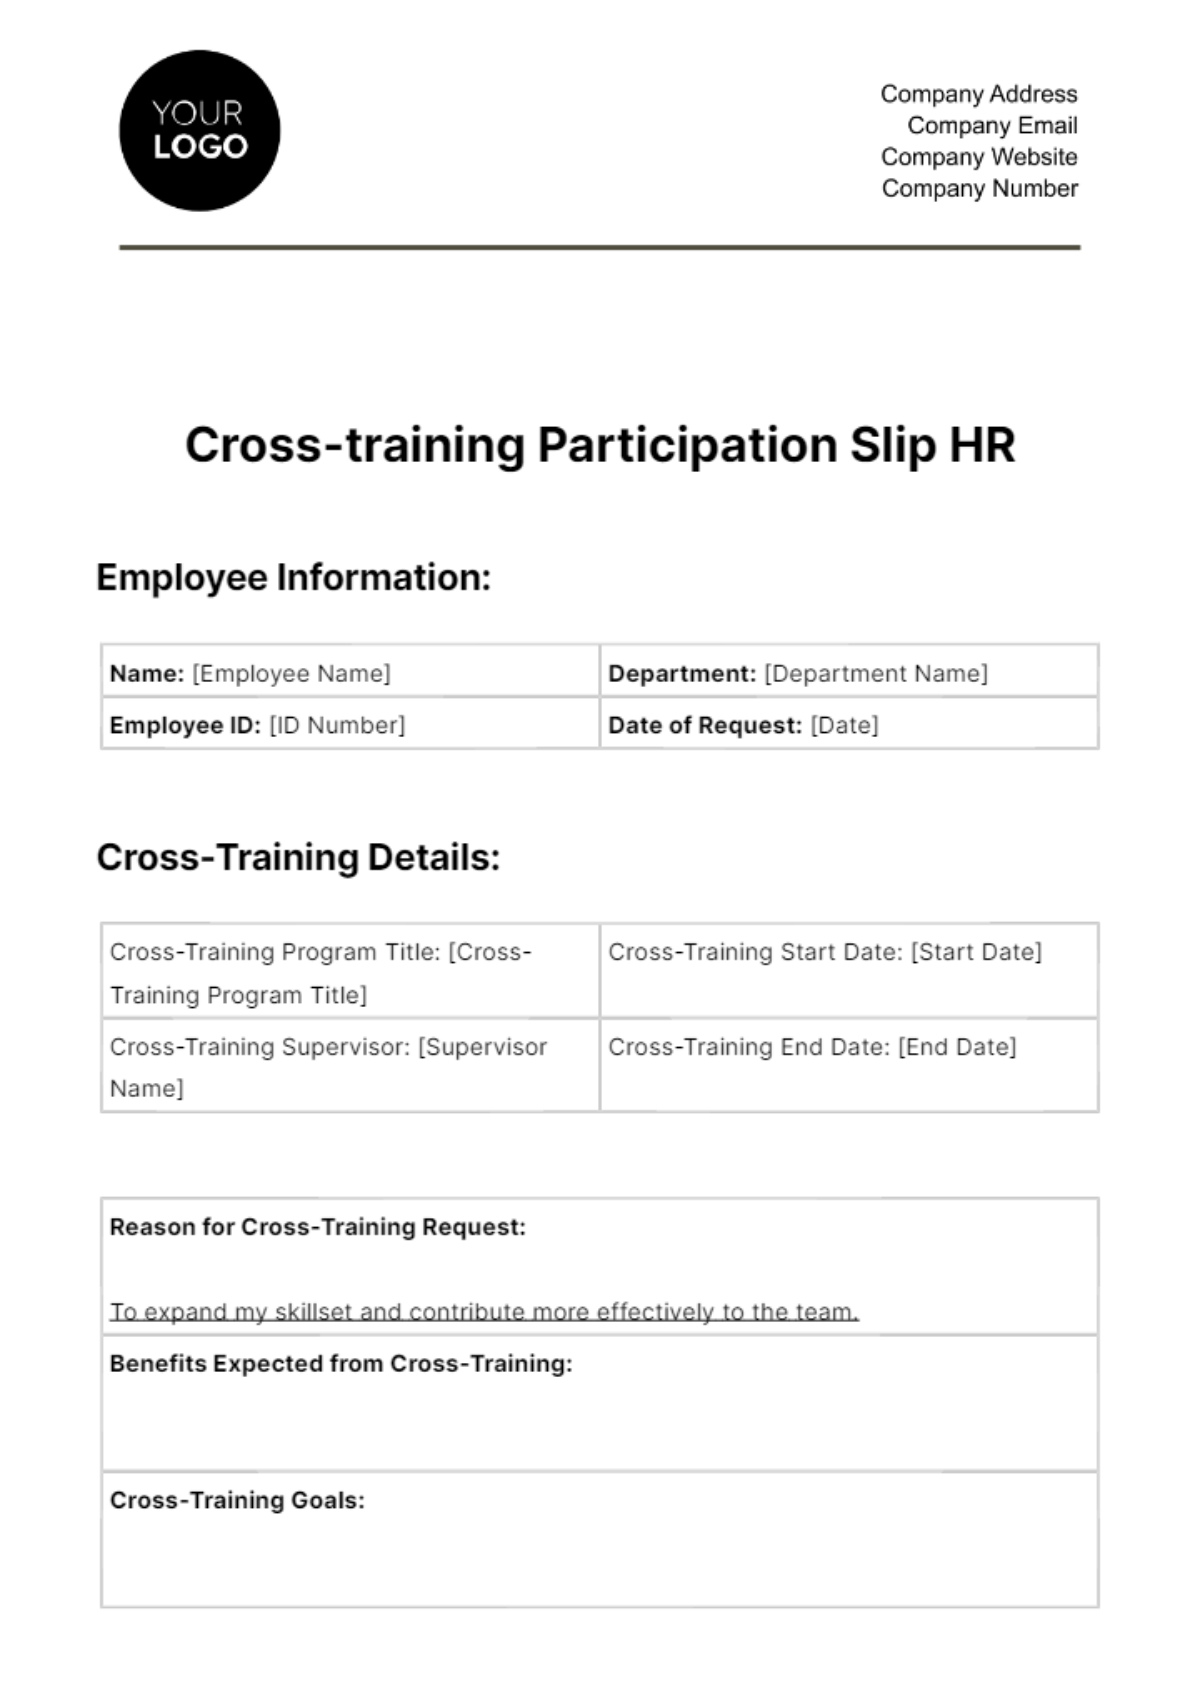 Cross-training Participation Slip HR Template